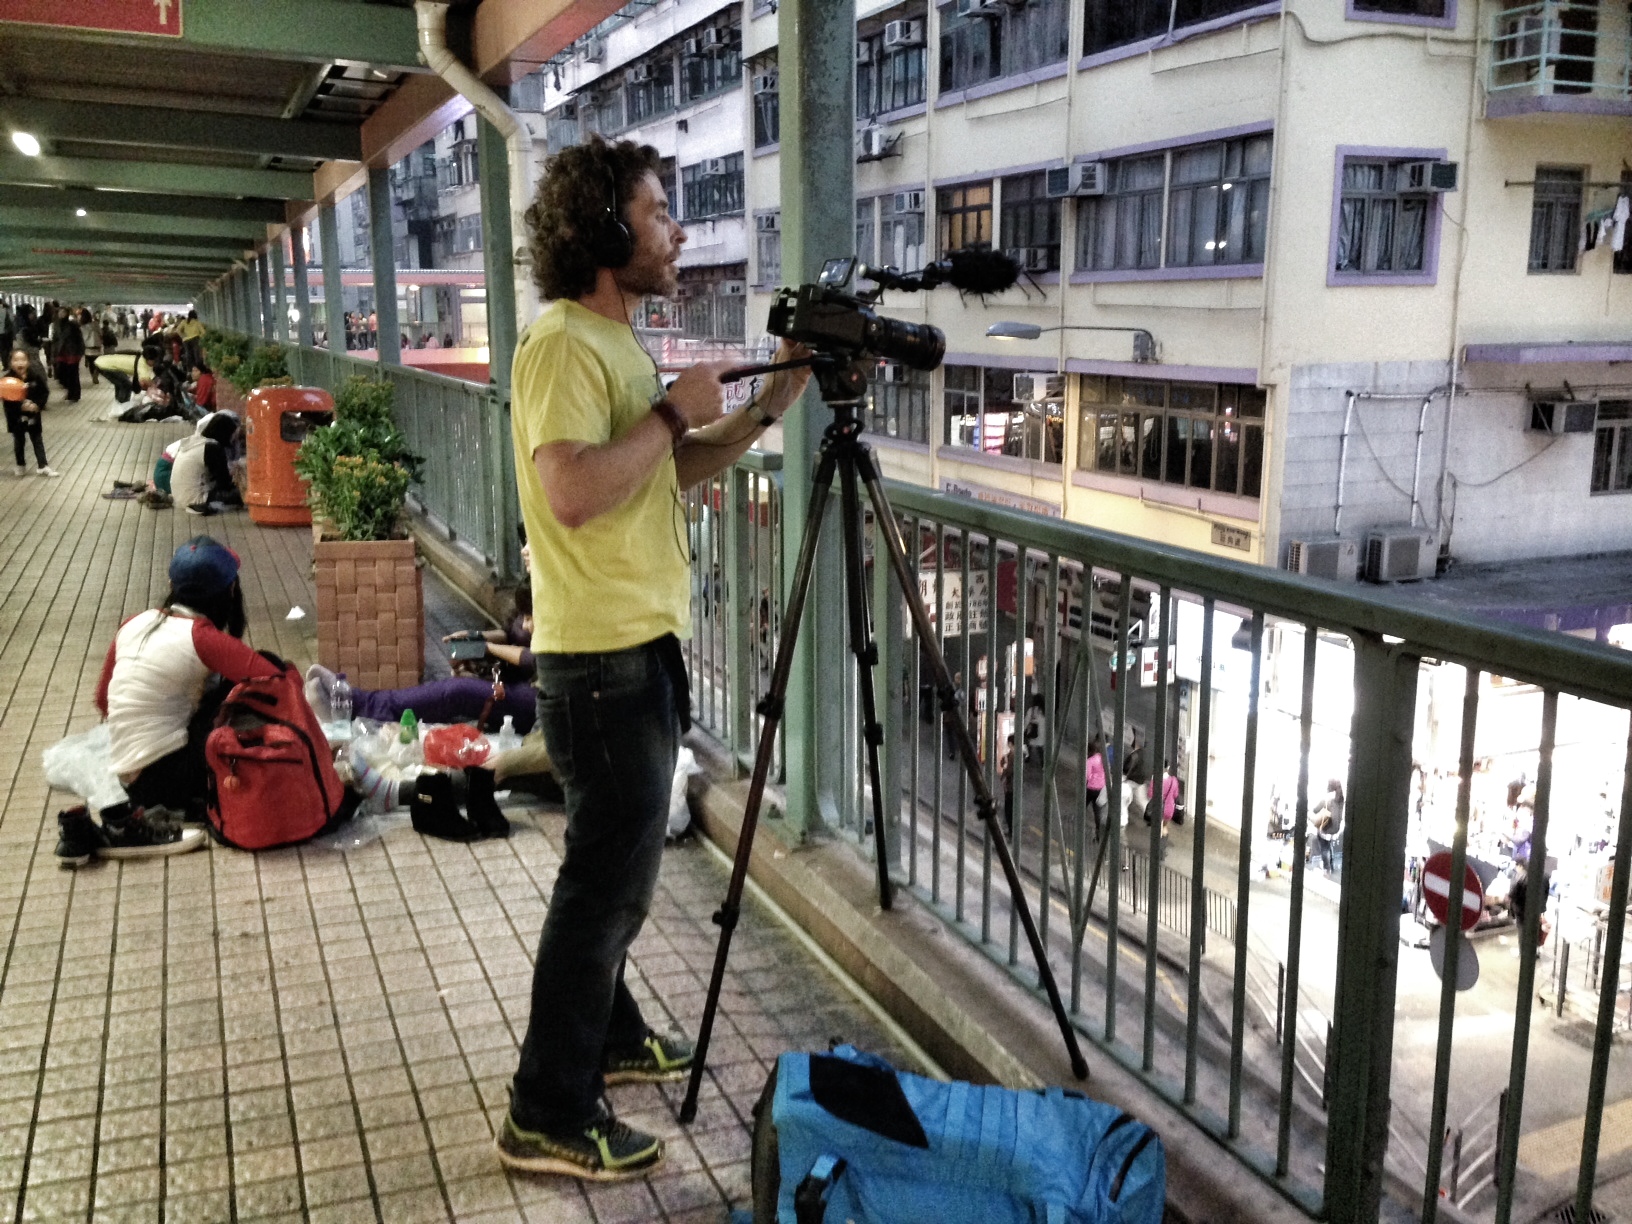 Filming street scenes in Mong Kok